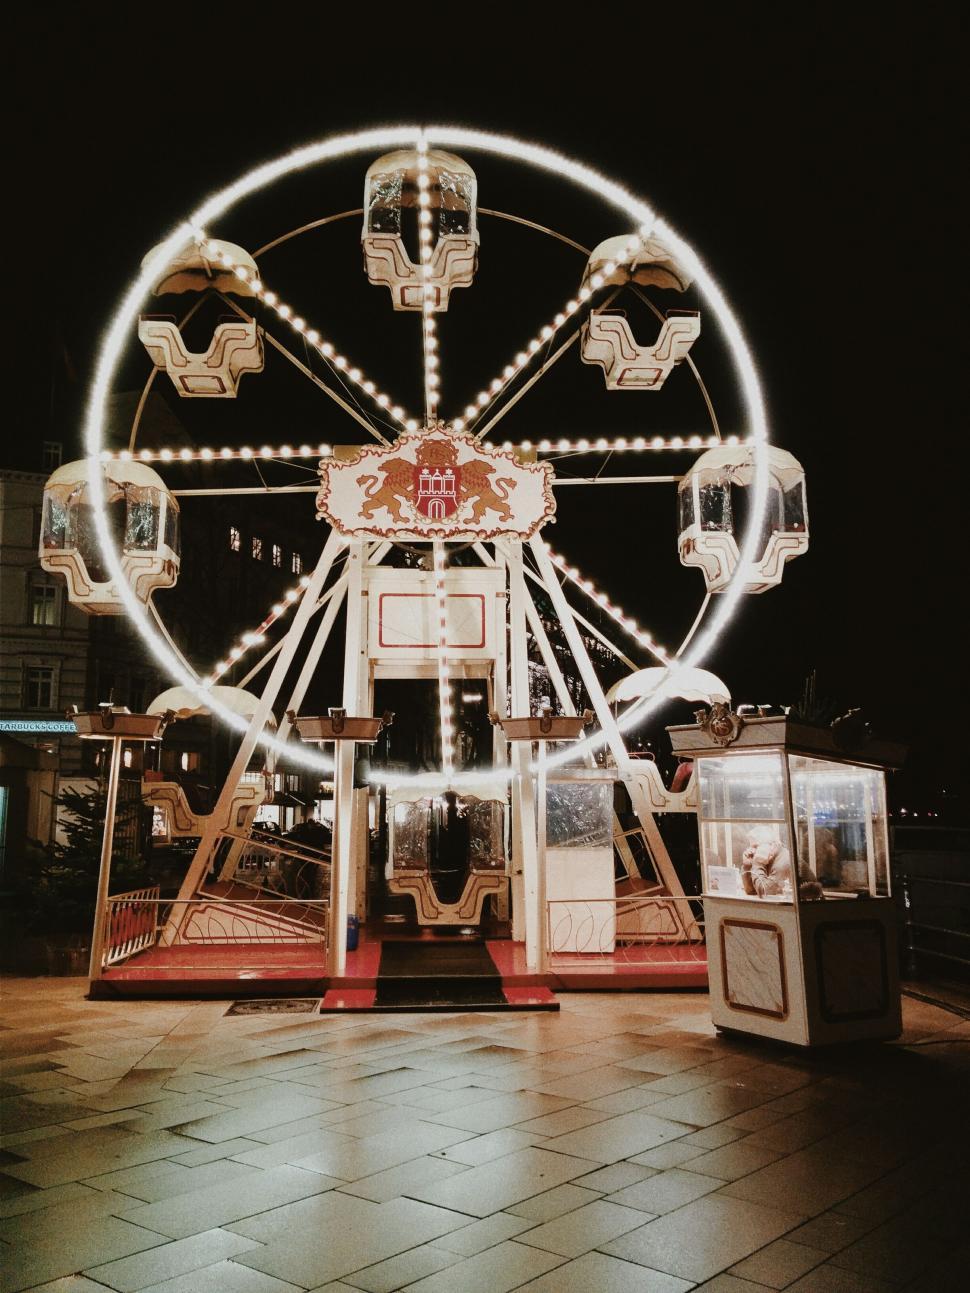 Free Image of Ferris Wheel Illuminated at Night 